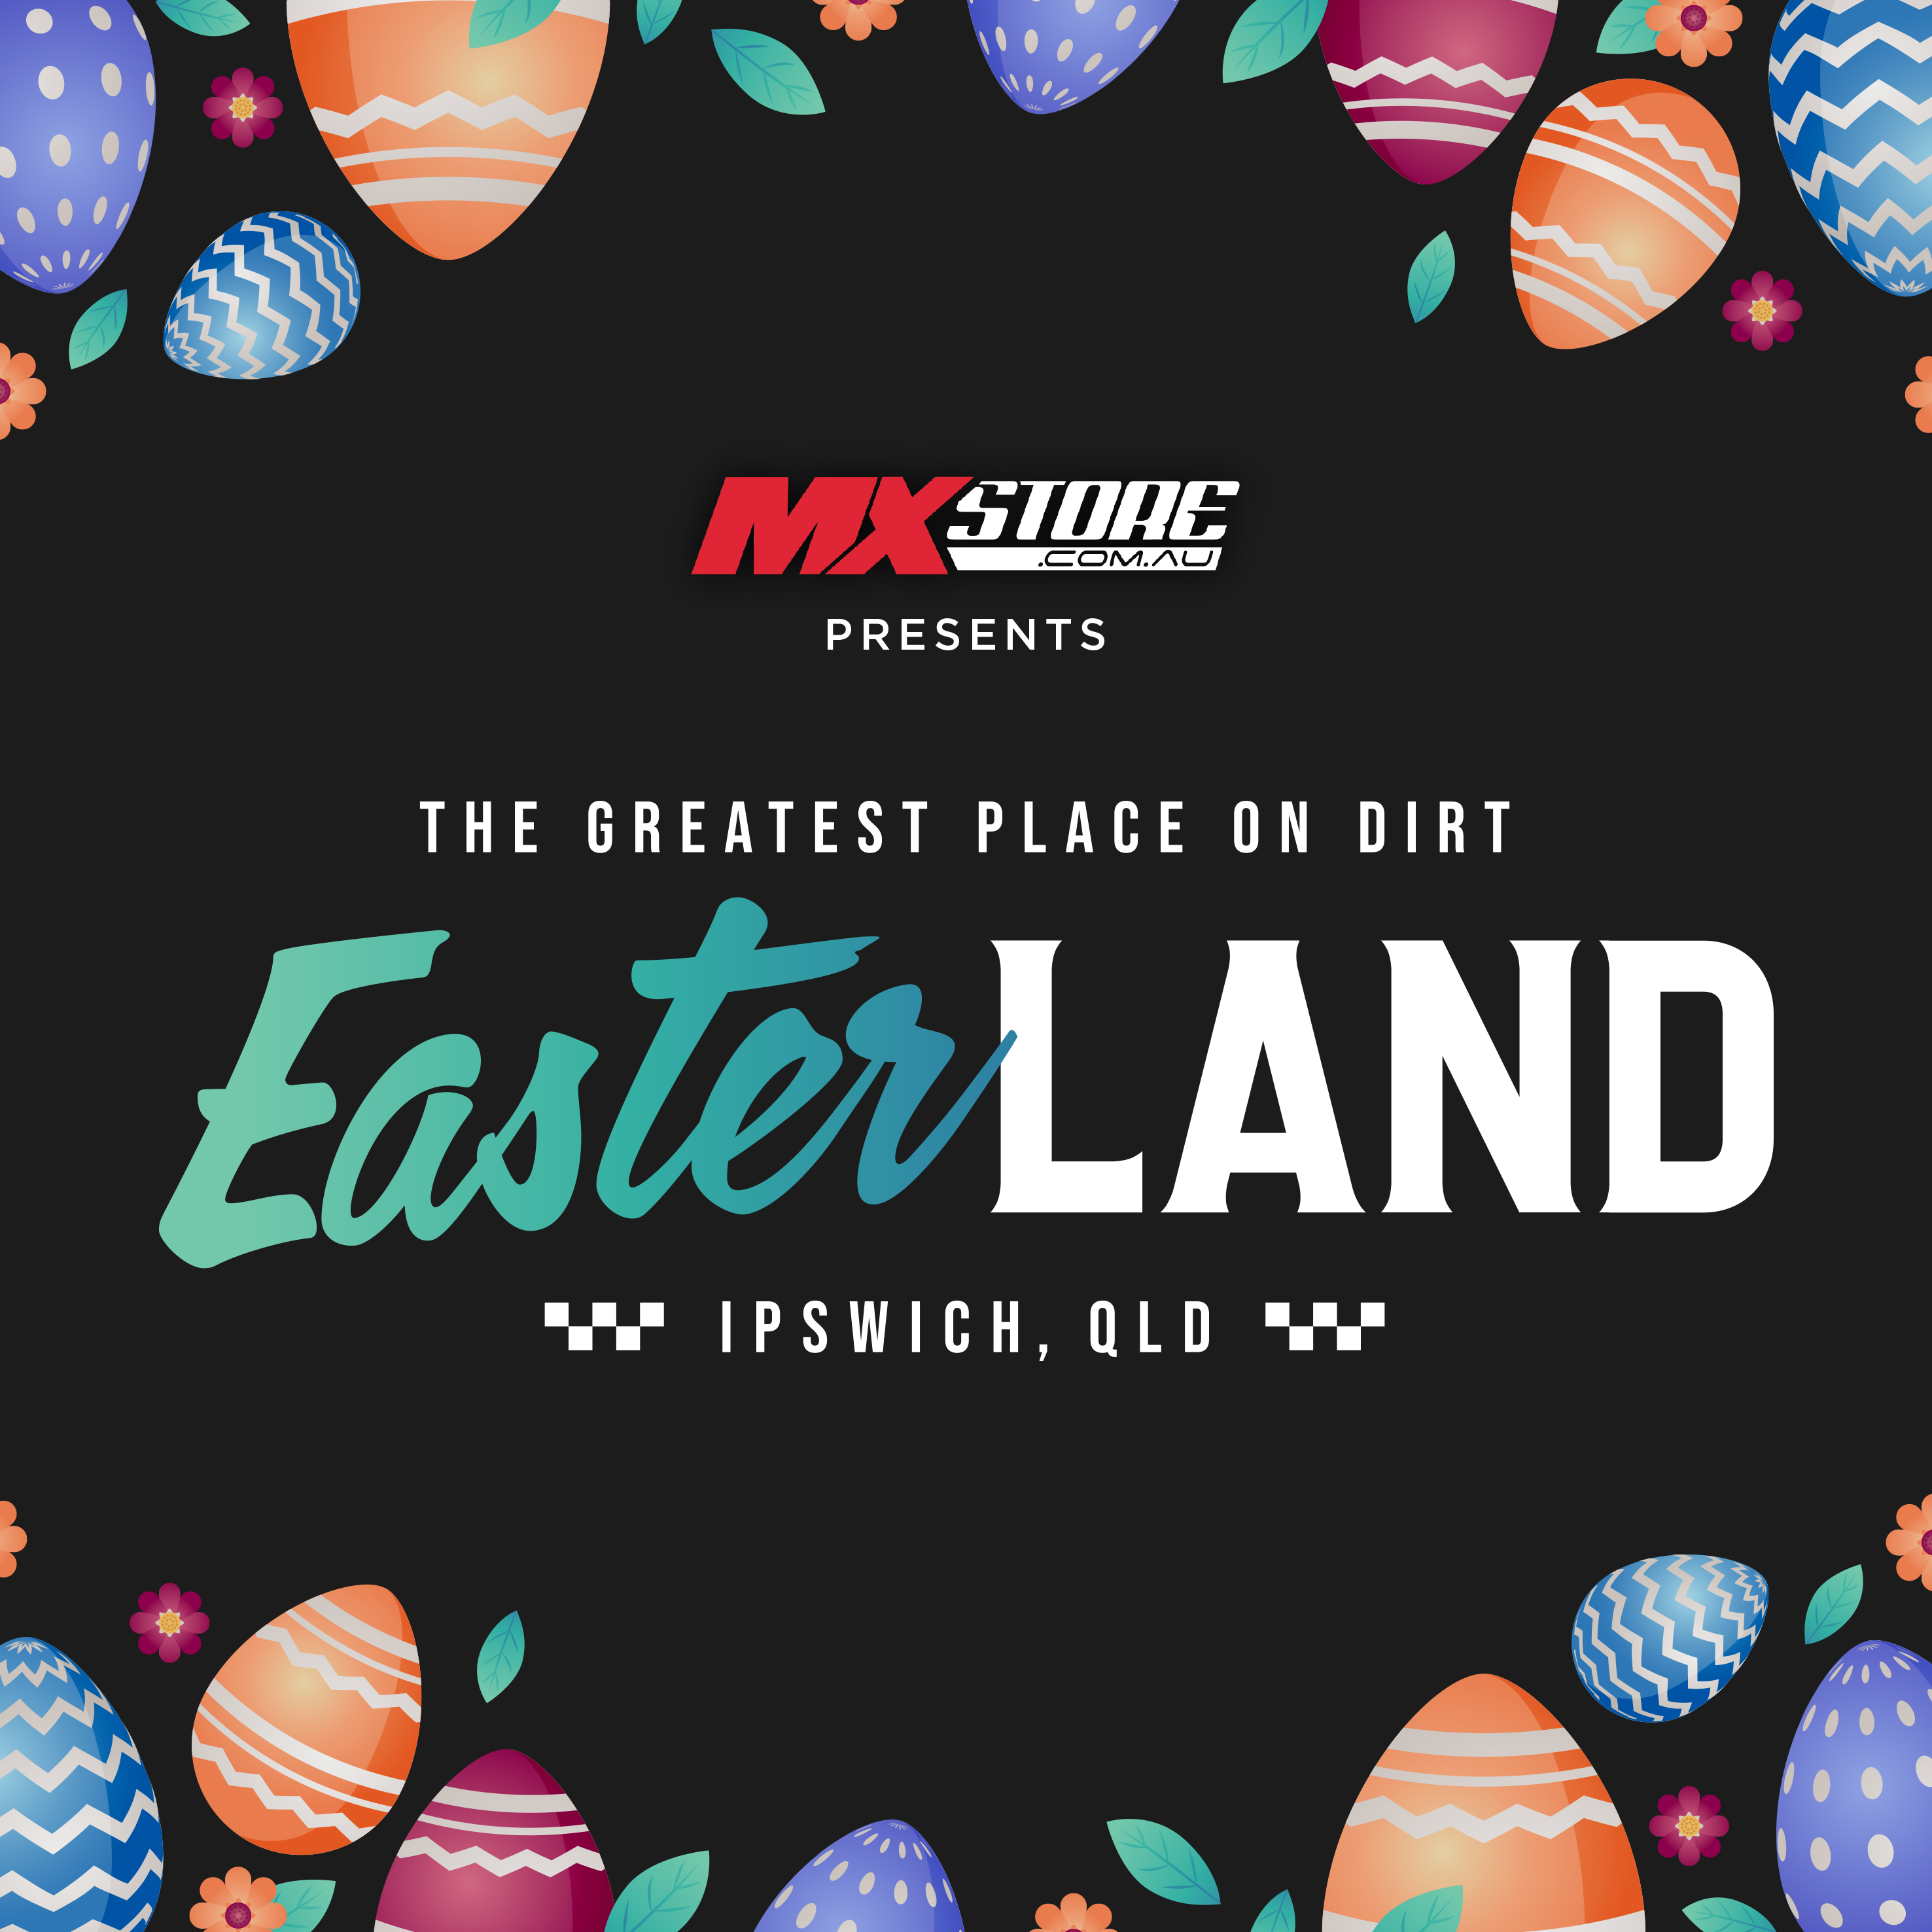 Easterland | Motoland Easter Ride Day 2022 